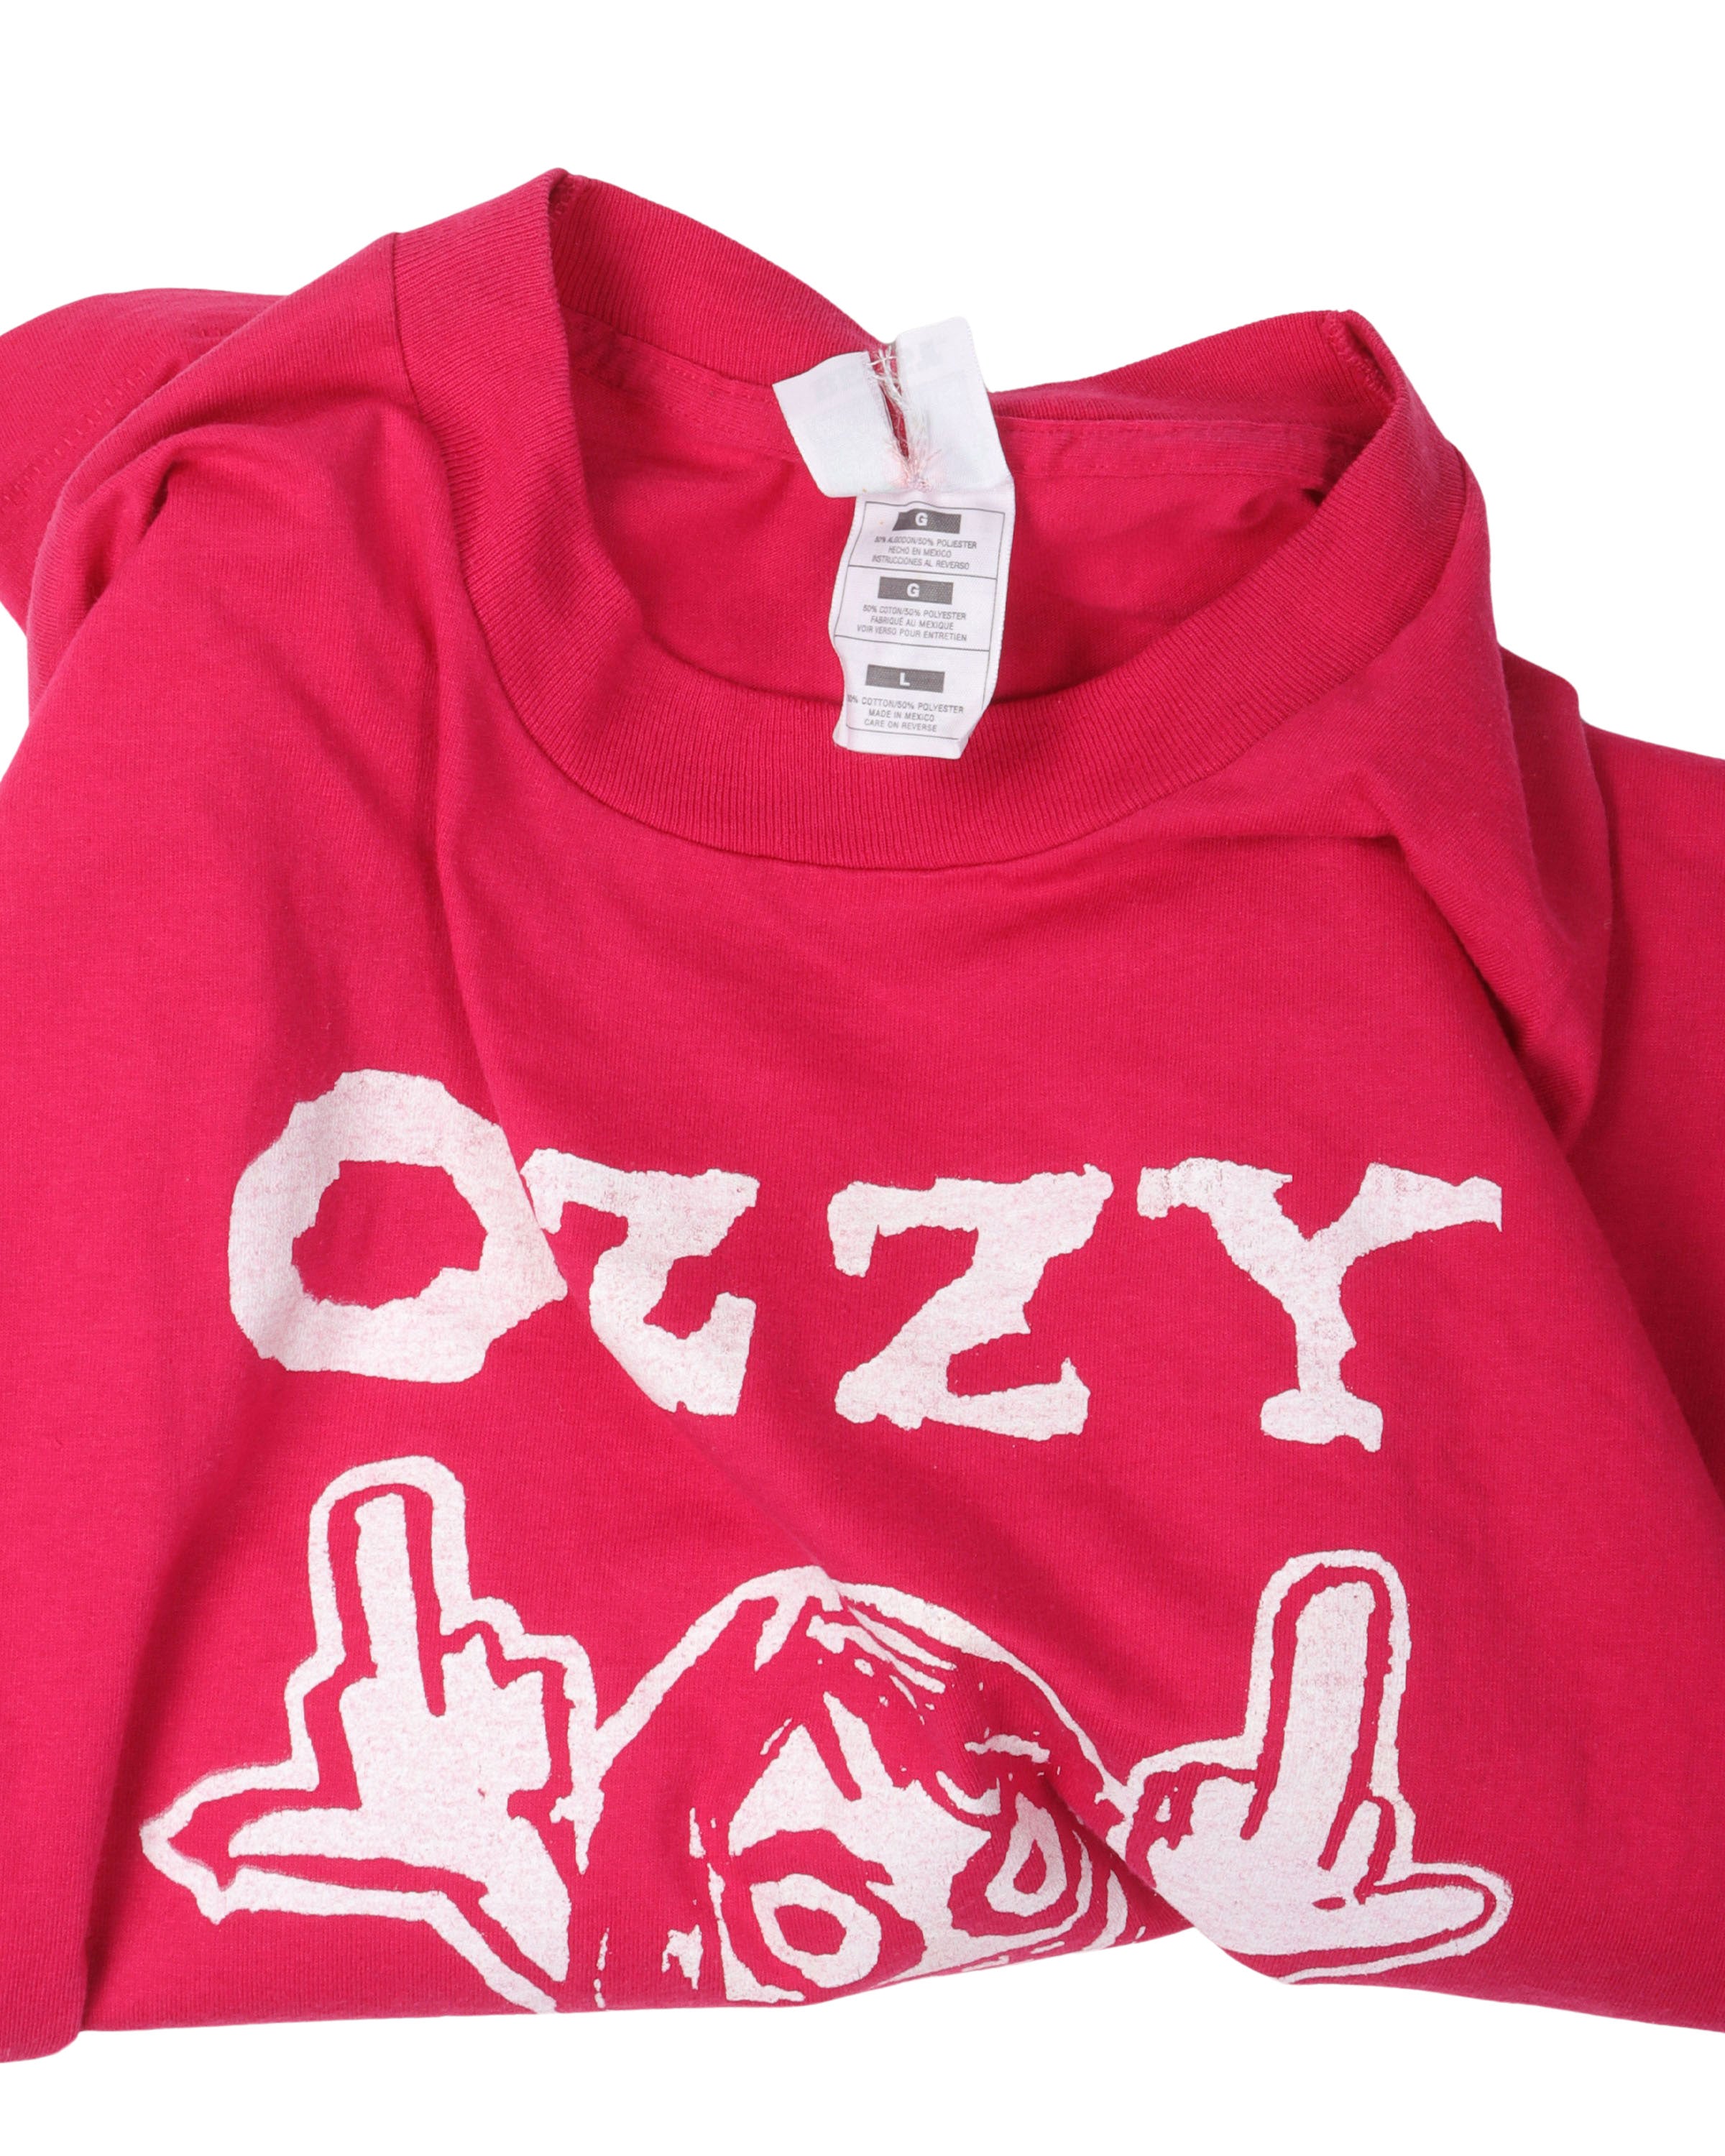 Ozzfest 1997 T-Shirt